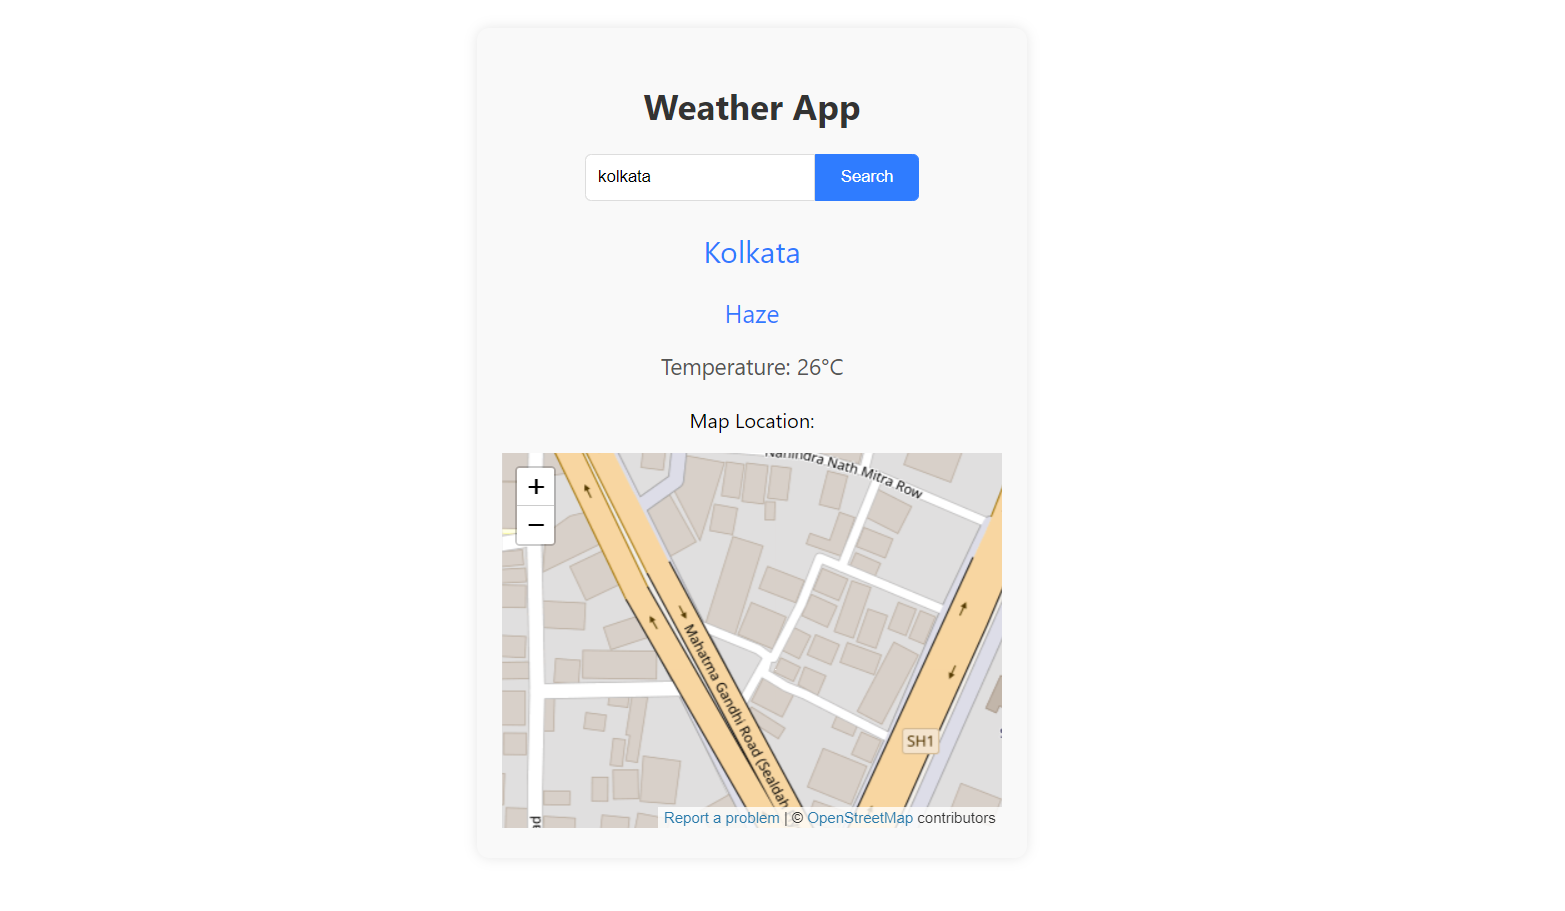 Testing weather app